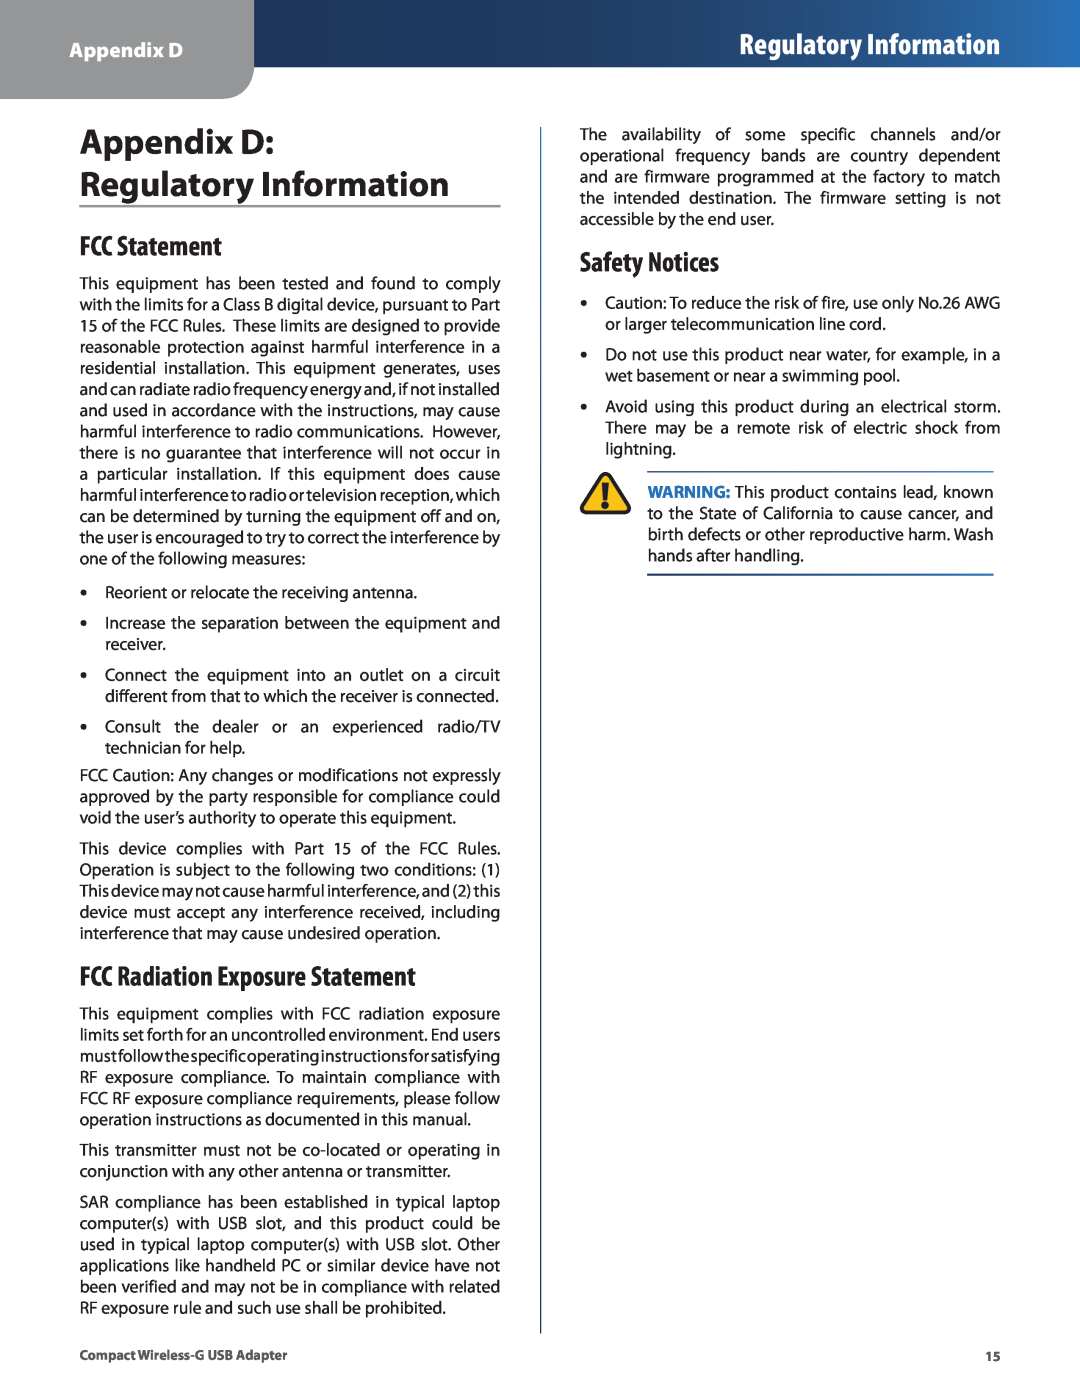 Cisco Systems WUSB54GC Appendix D Regulatory Information, FCC Statement, FCC Radiation Exposure Statement, Safety Notices 